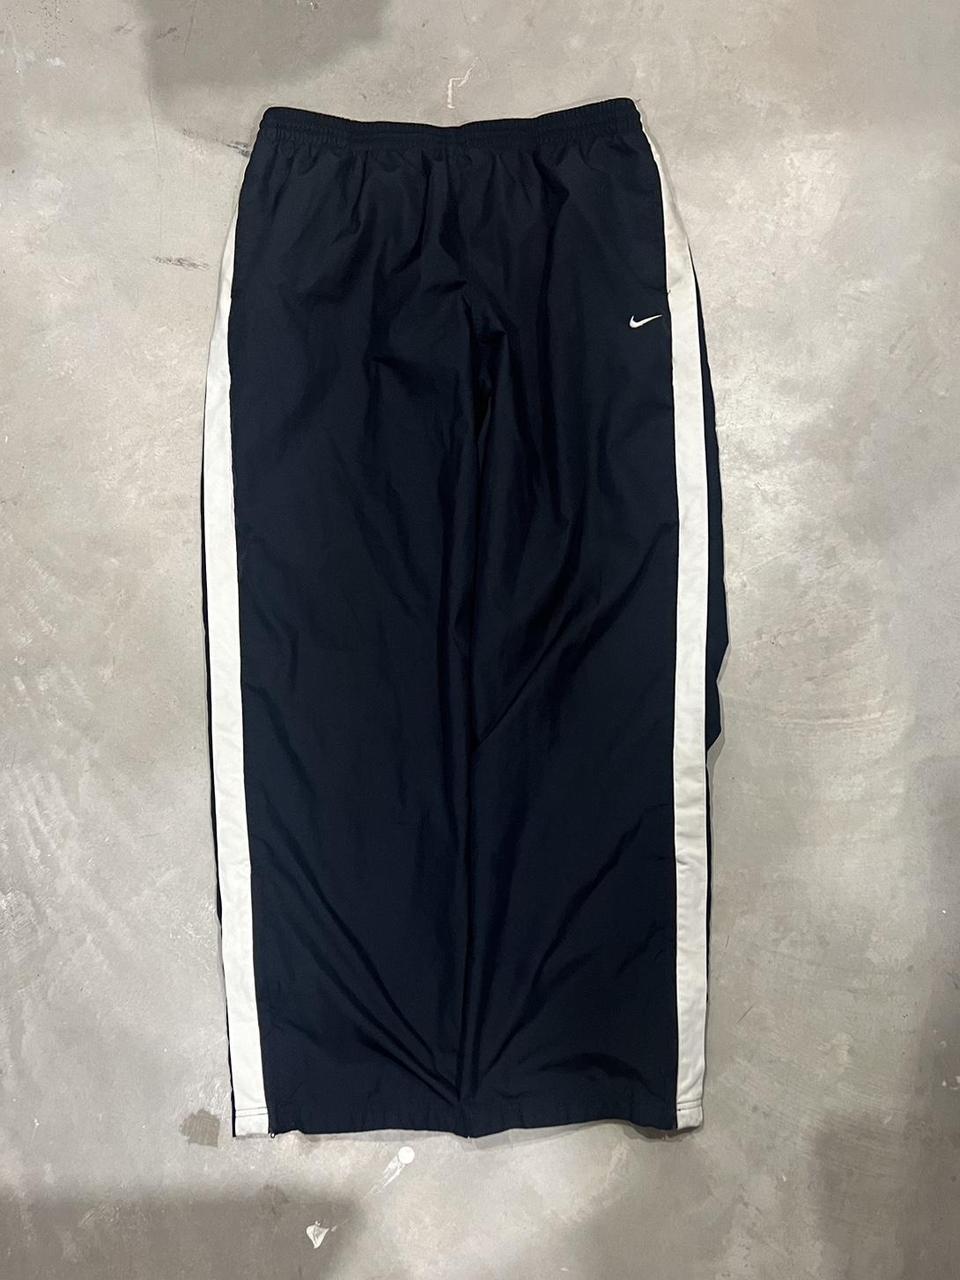 2000s black Nike track pants Tagged xl Send offers... - Depop